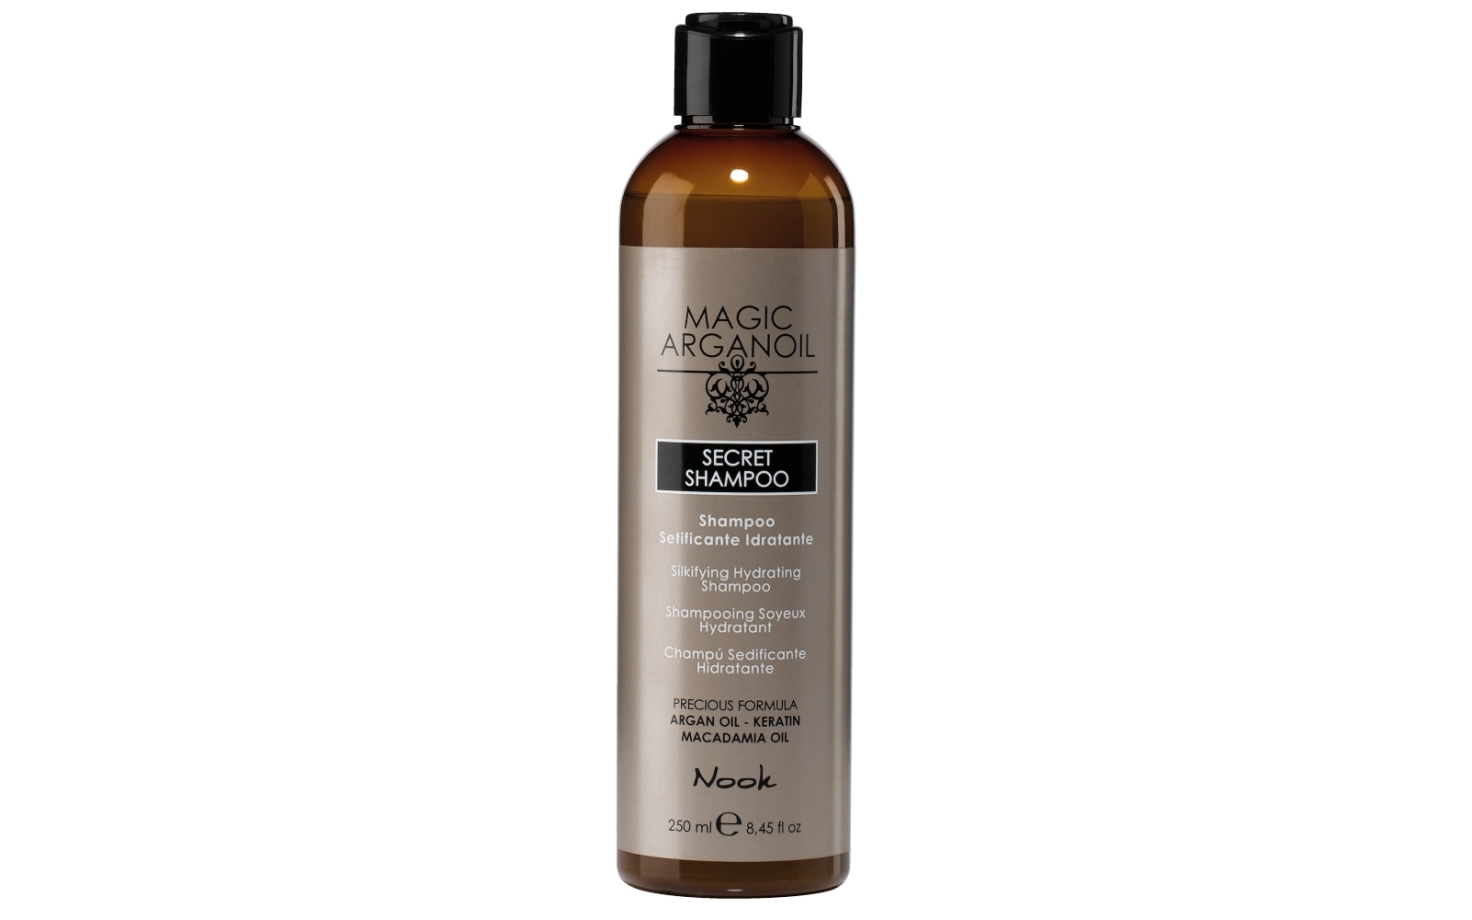 Nook Magic Arganoil Secret Shampoo